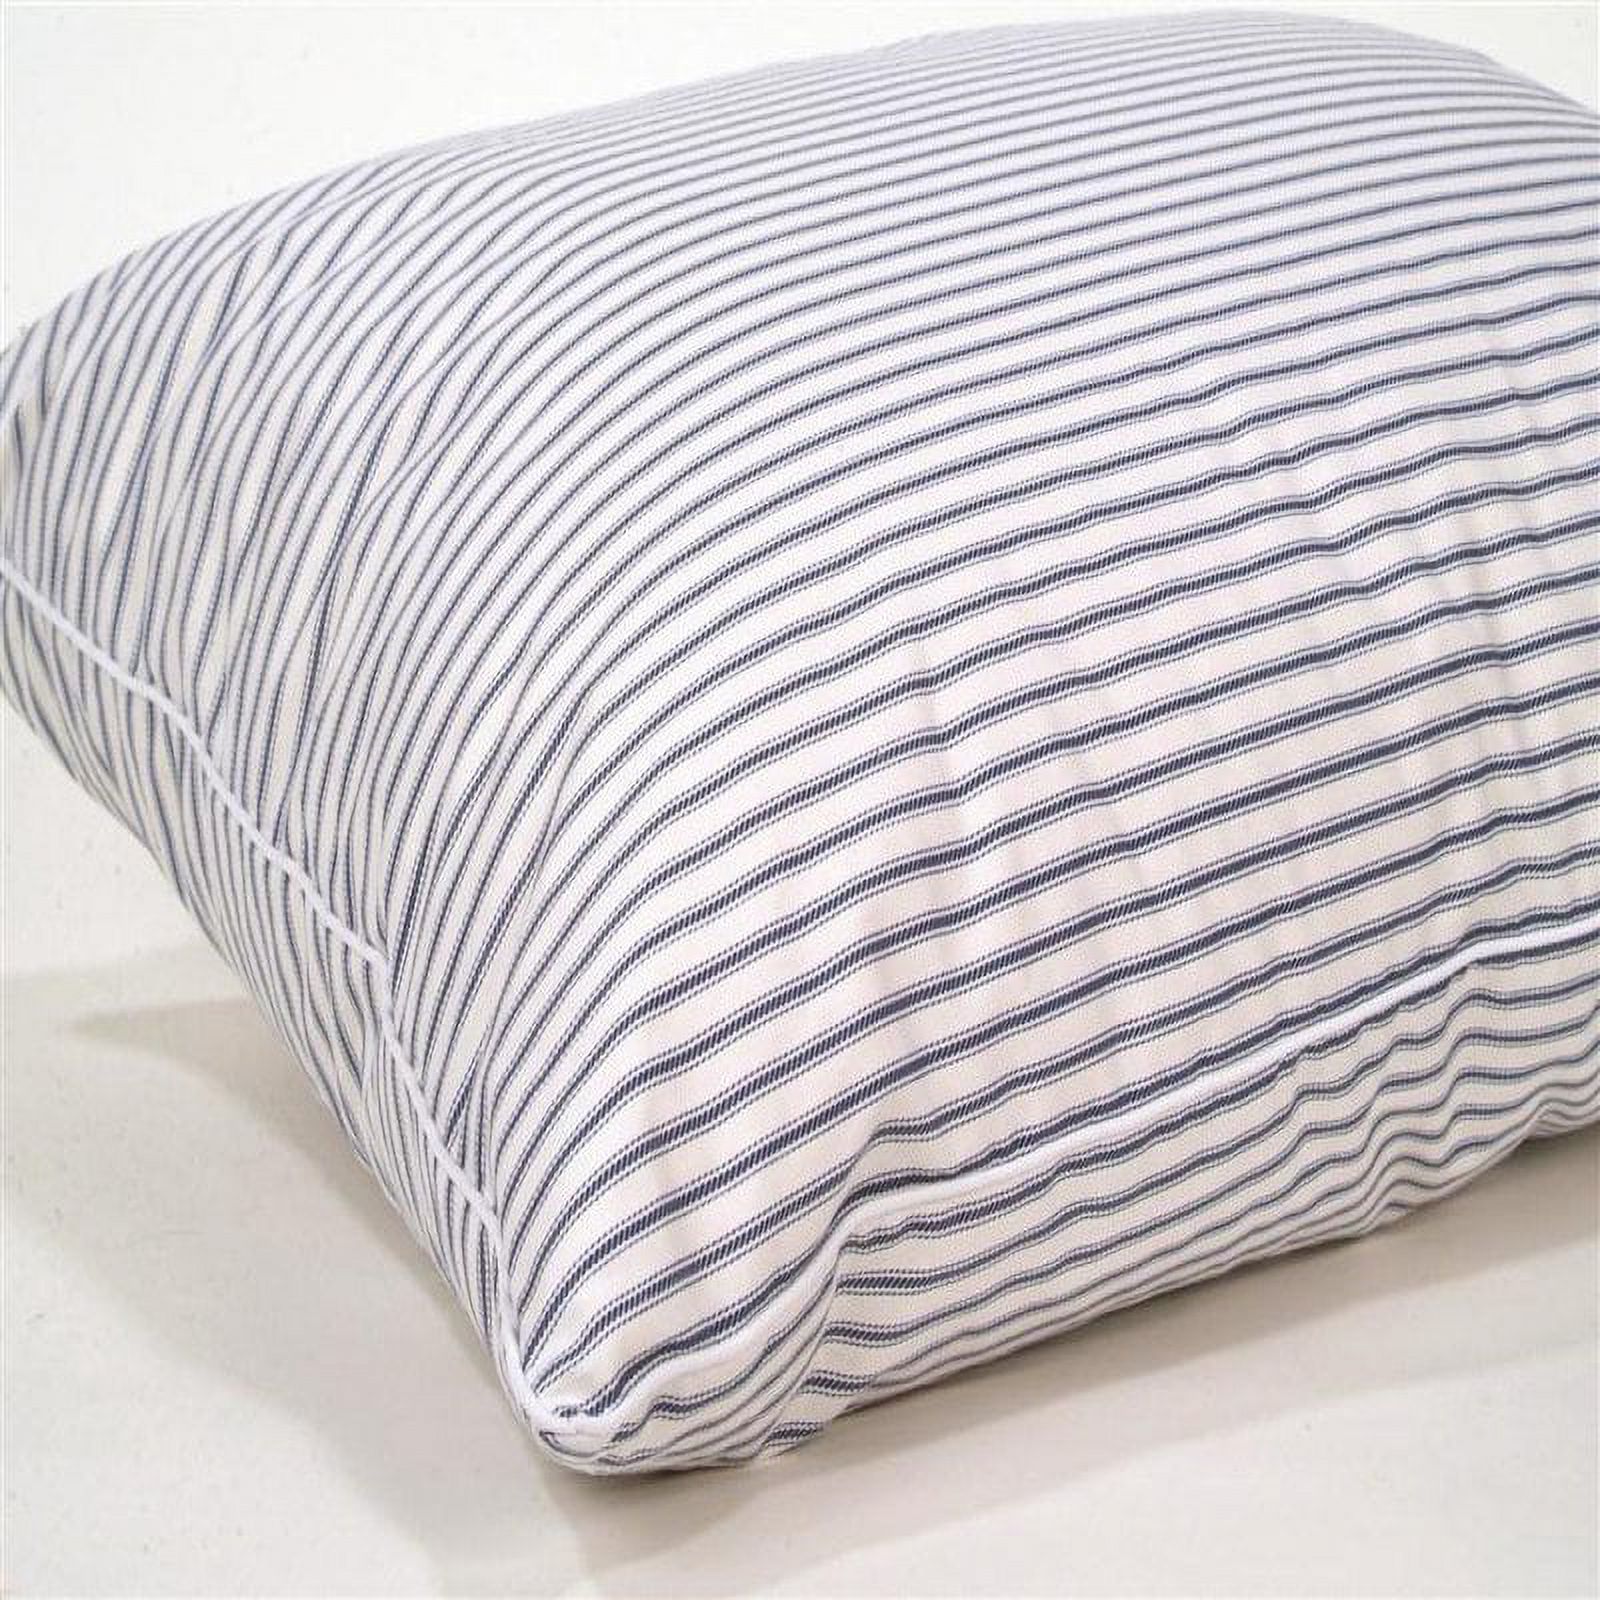 Premium Down Pillow - Travel Size - image 1 of 3